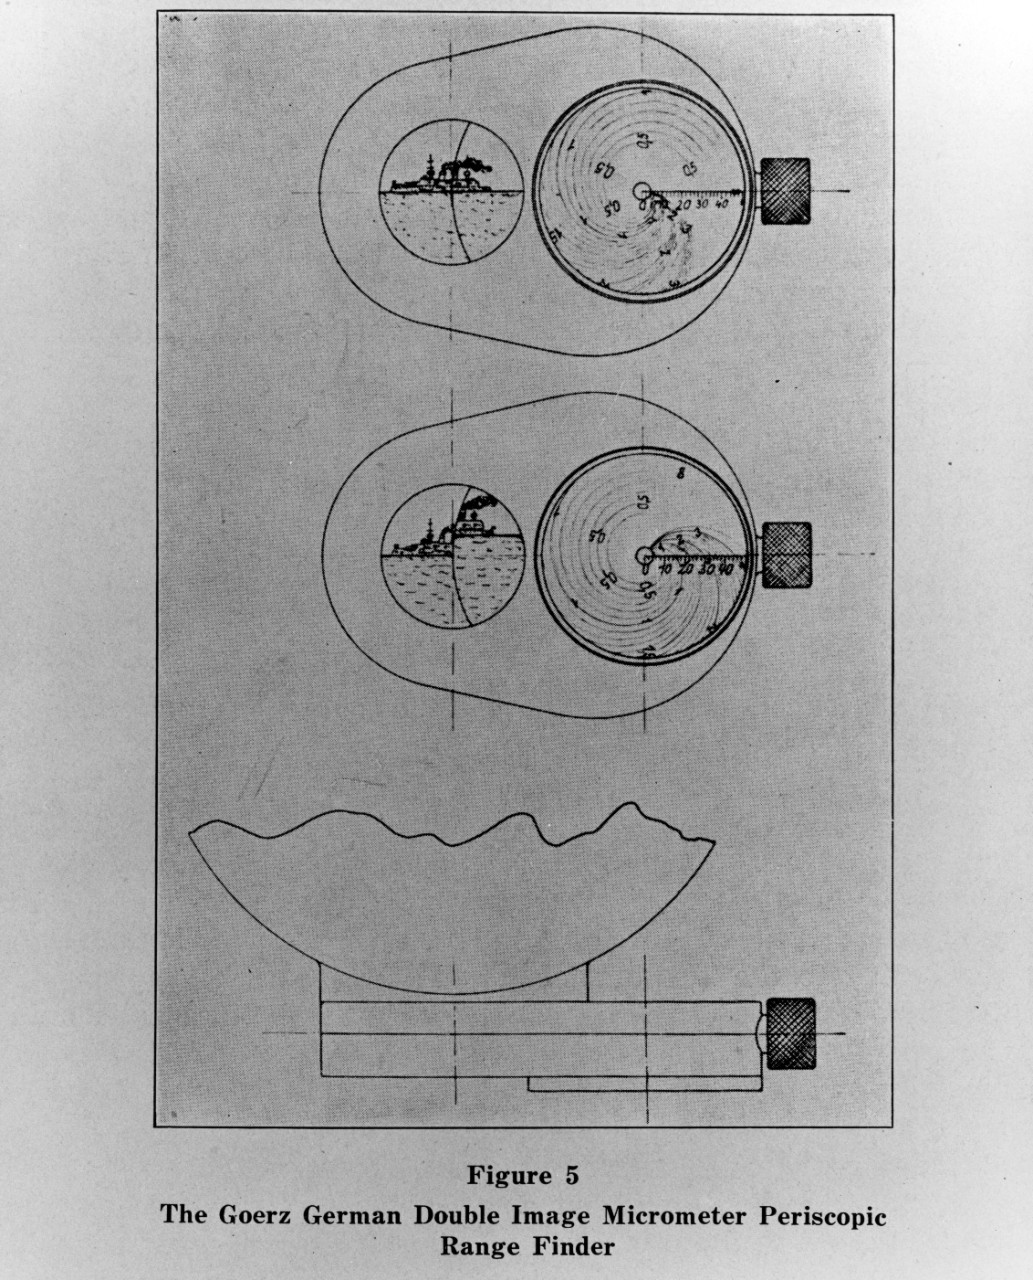 Sketch of a German periscope range finder